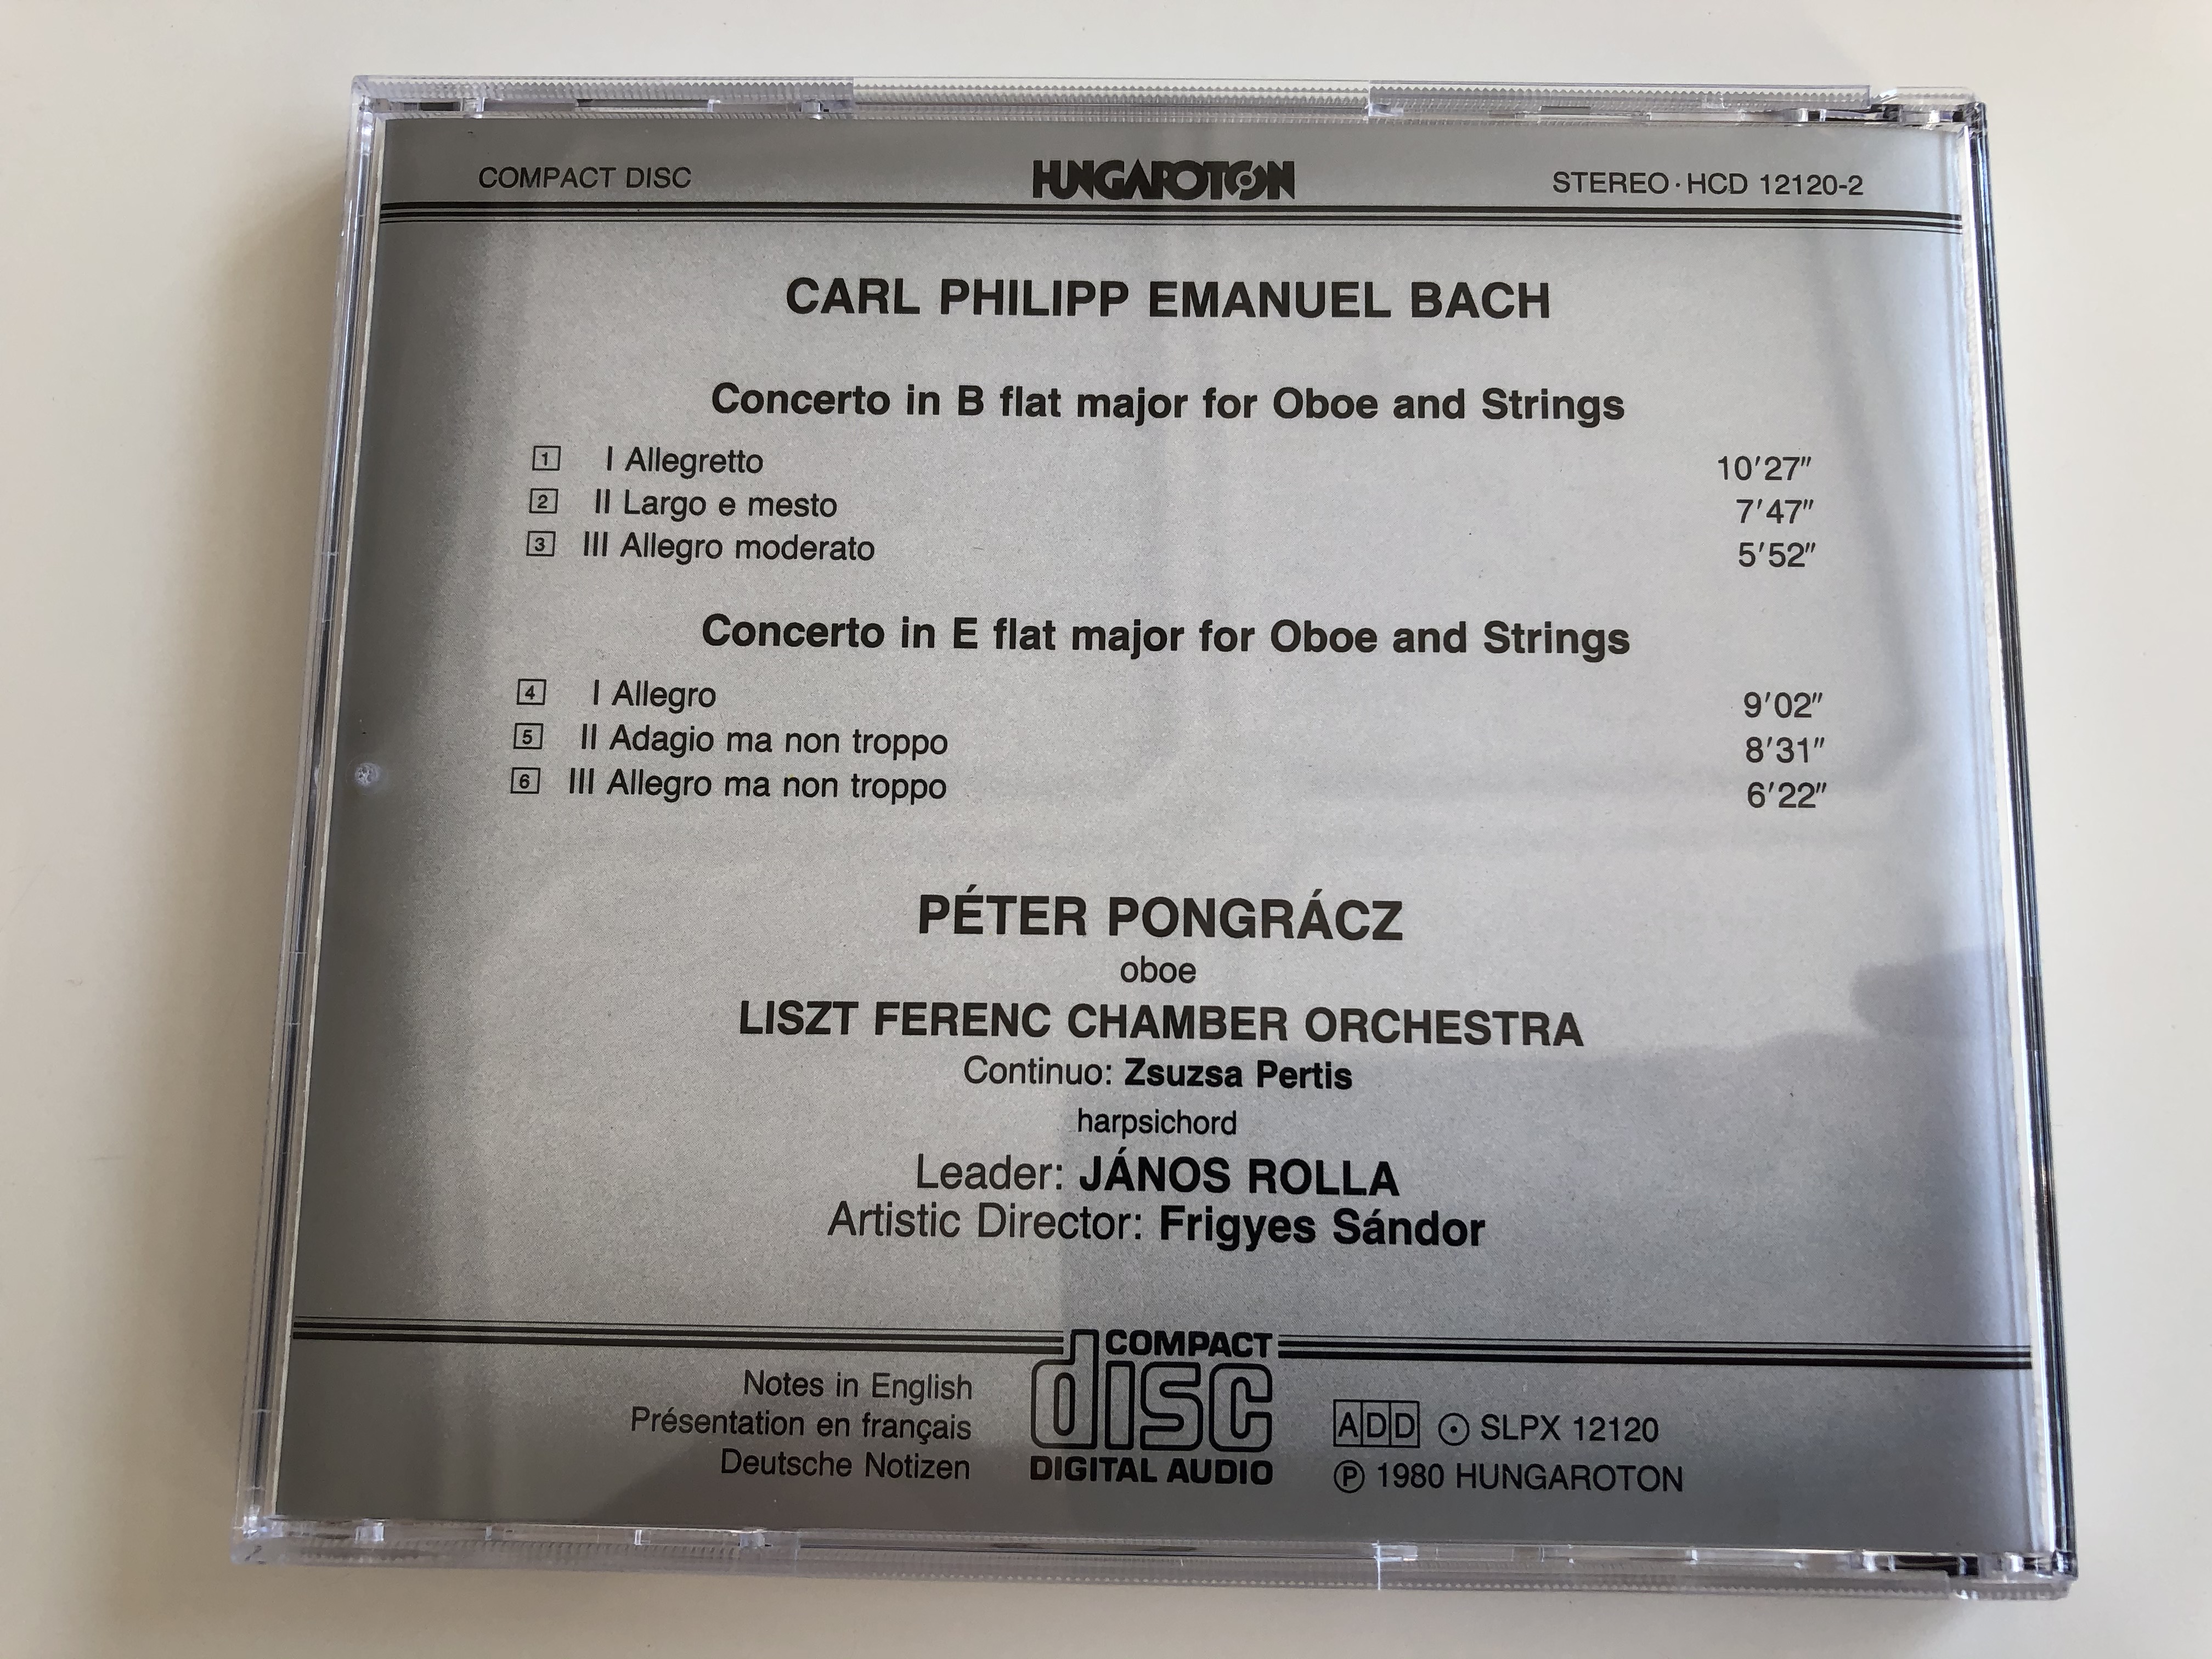 carl-philipp-emanuel-bach-oboe-concertos-p-ter-pongr-cz-liszt-ferenc-chamber-orchestra-budapest-leader-janos-rolla-artistic-director-frigyes-sandor-hungaroton-classic-audio-cd-1995-6-.jpg